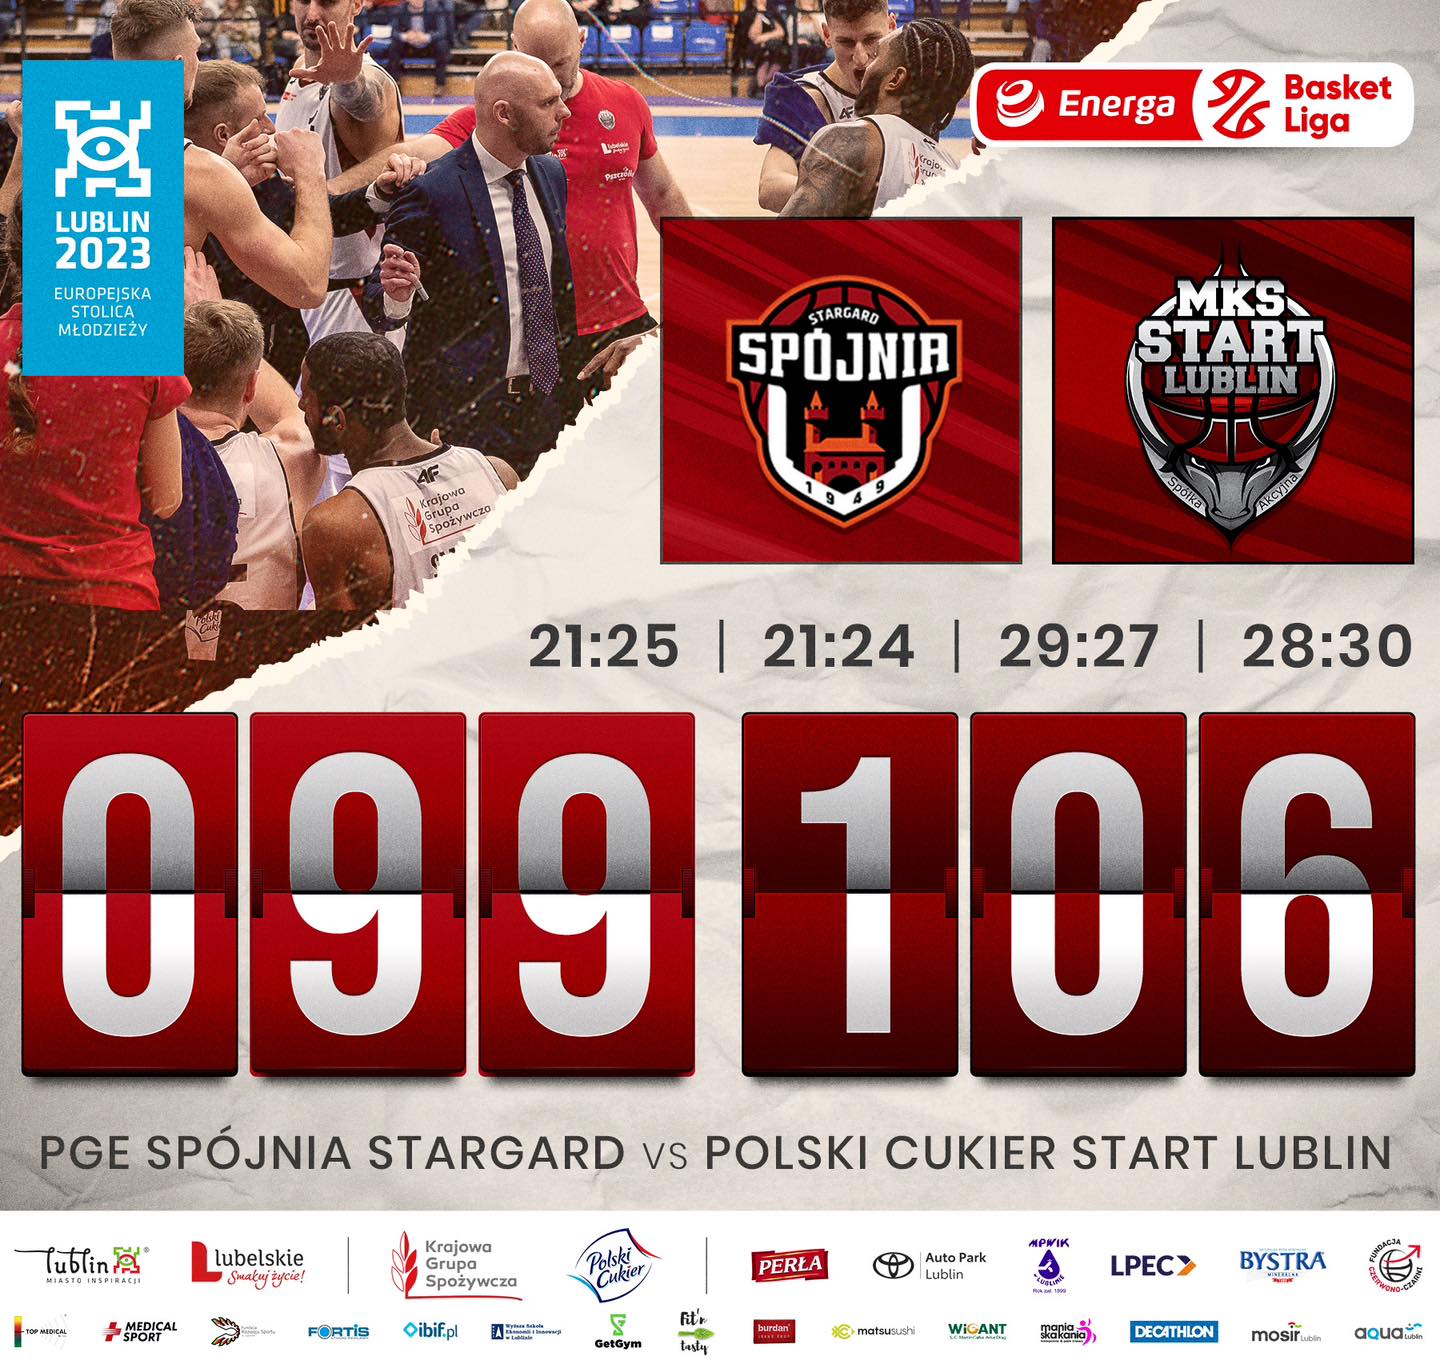 PGE Spójnia Stargard - Polski Cukier Start Lublin 99:106